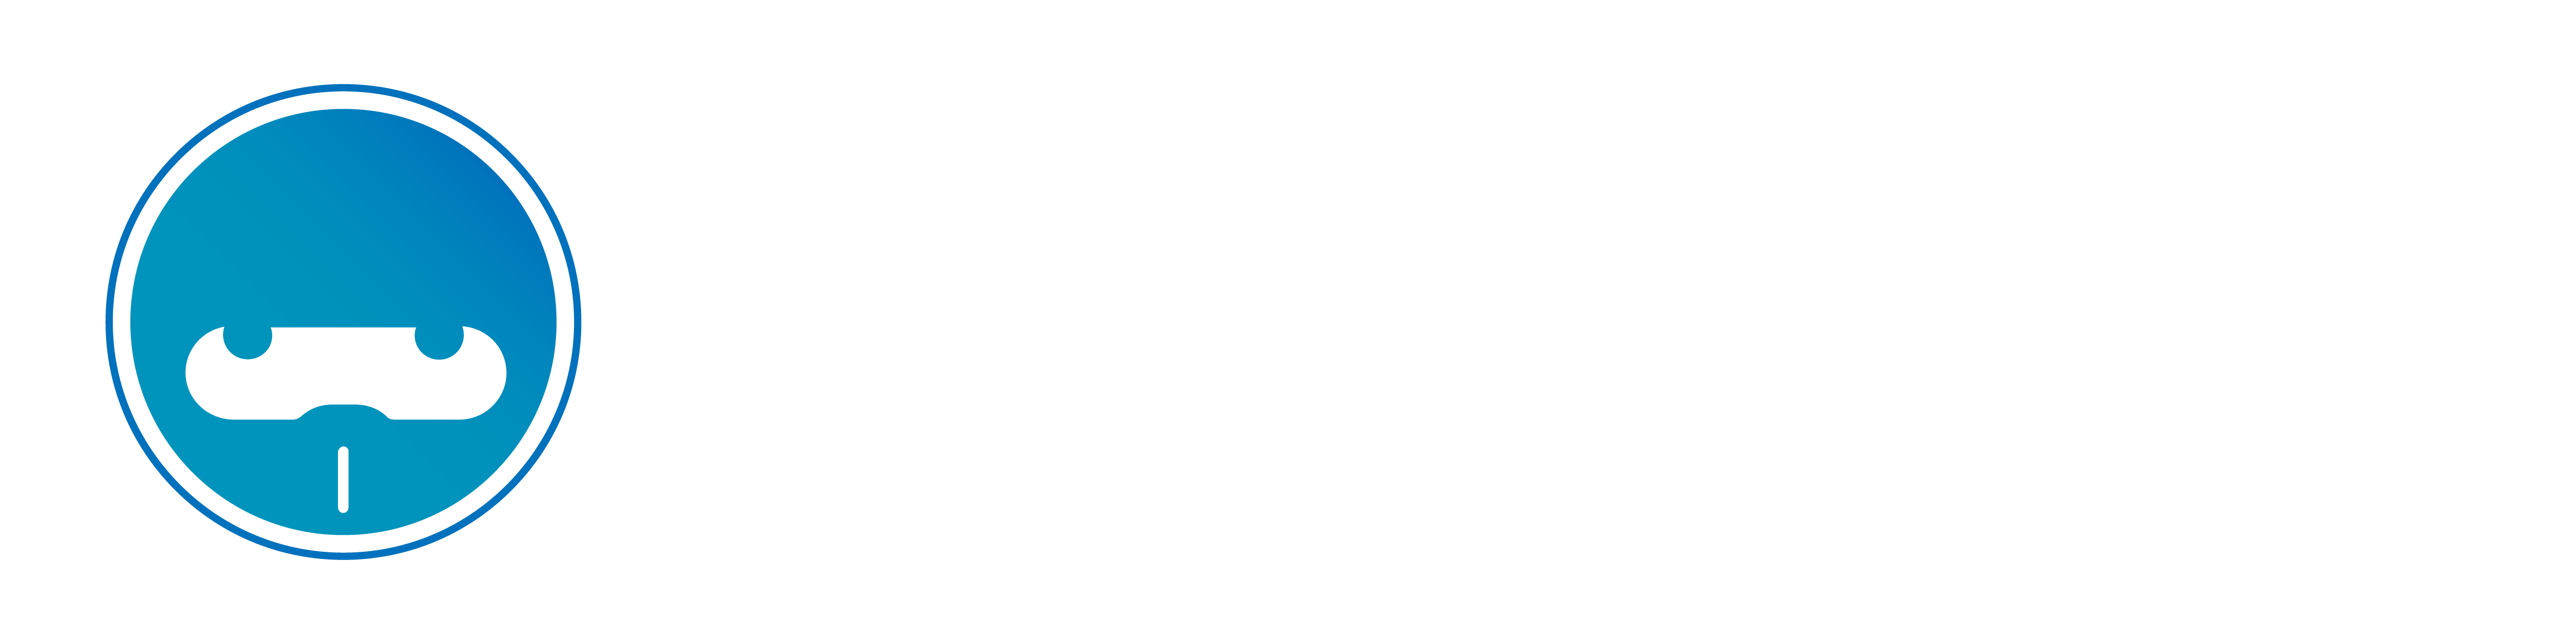 Lapakninja.com